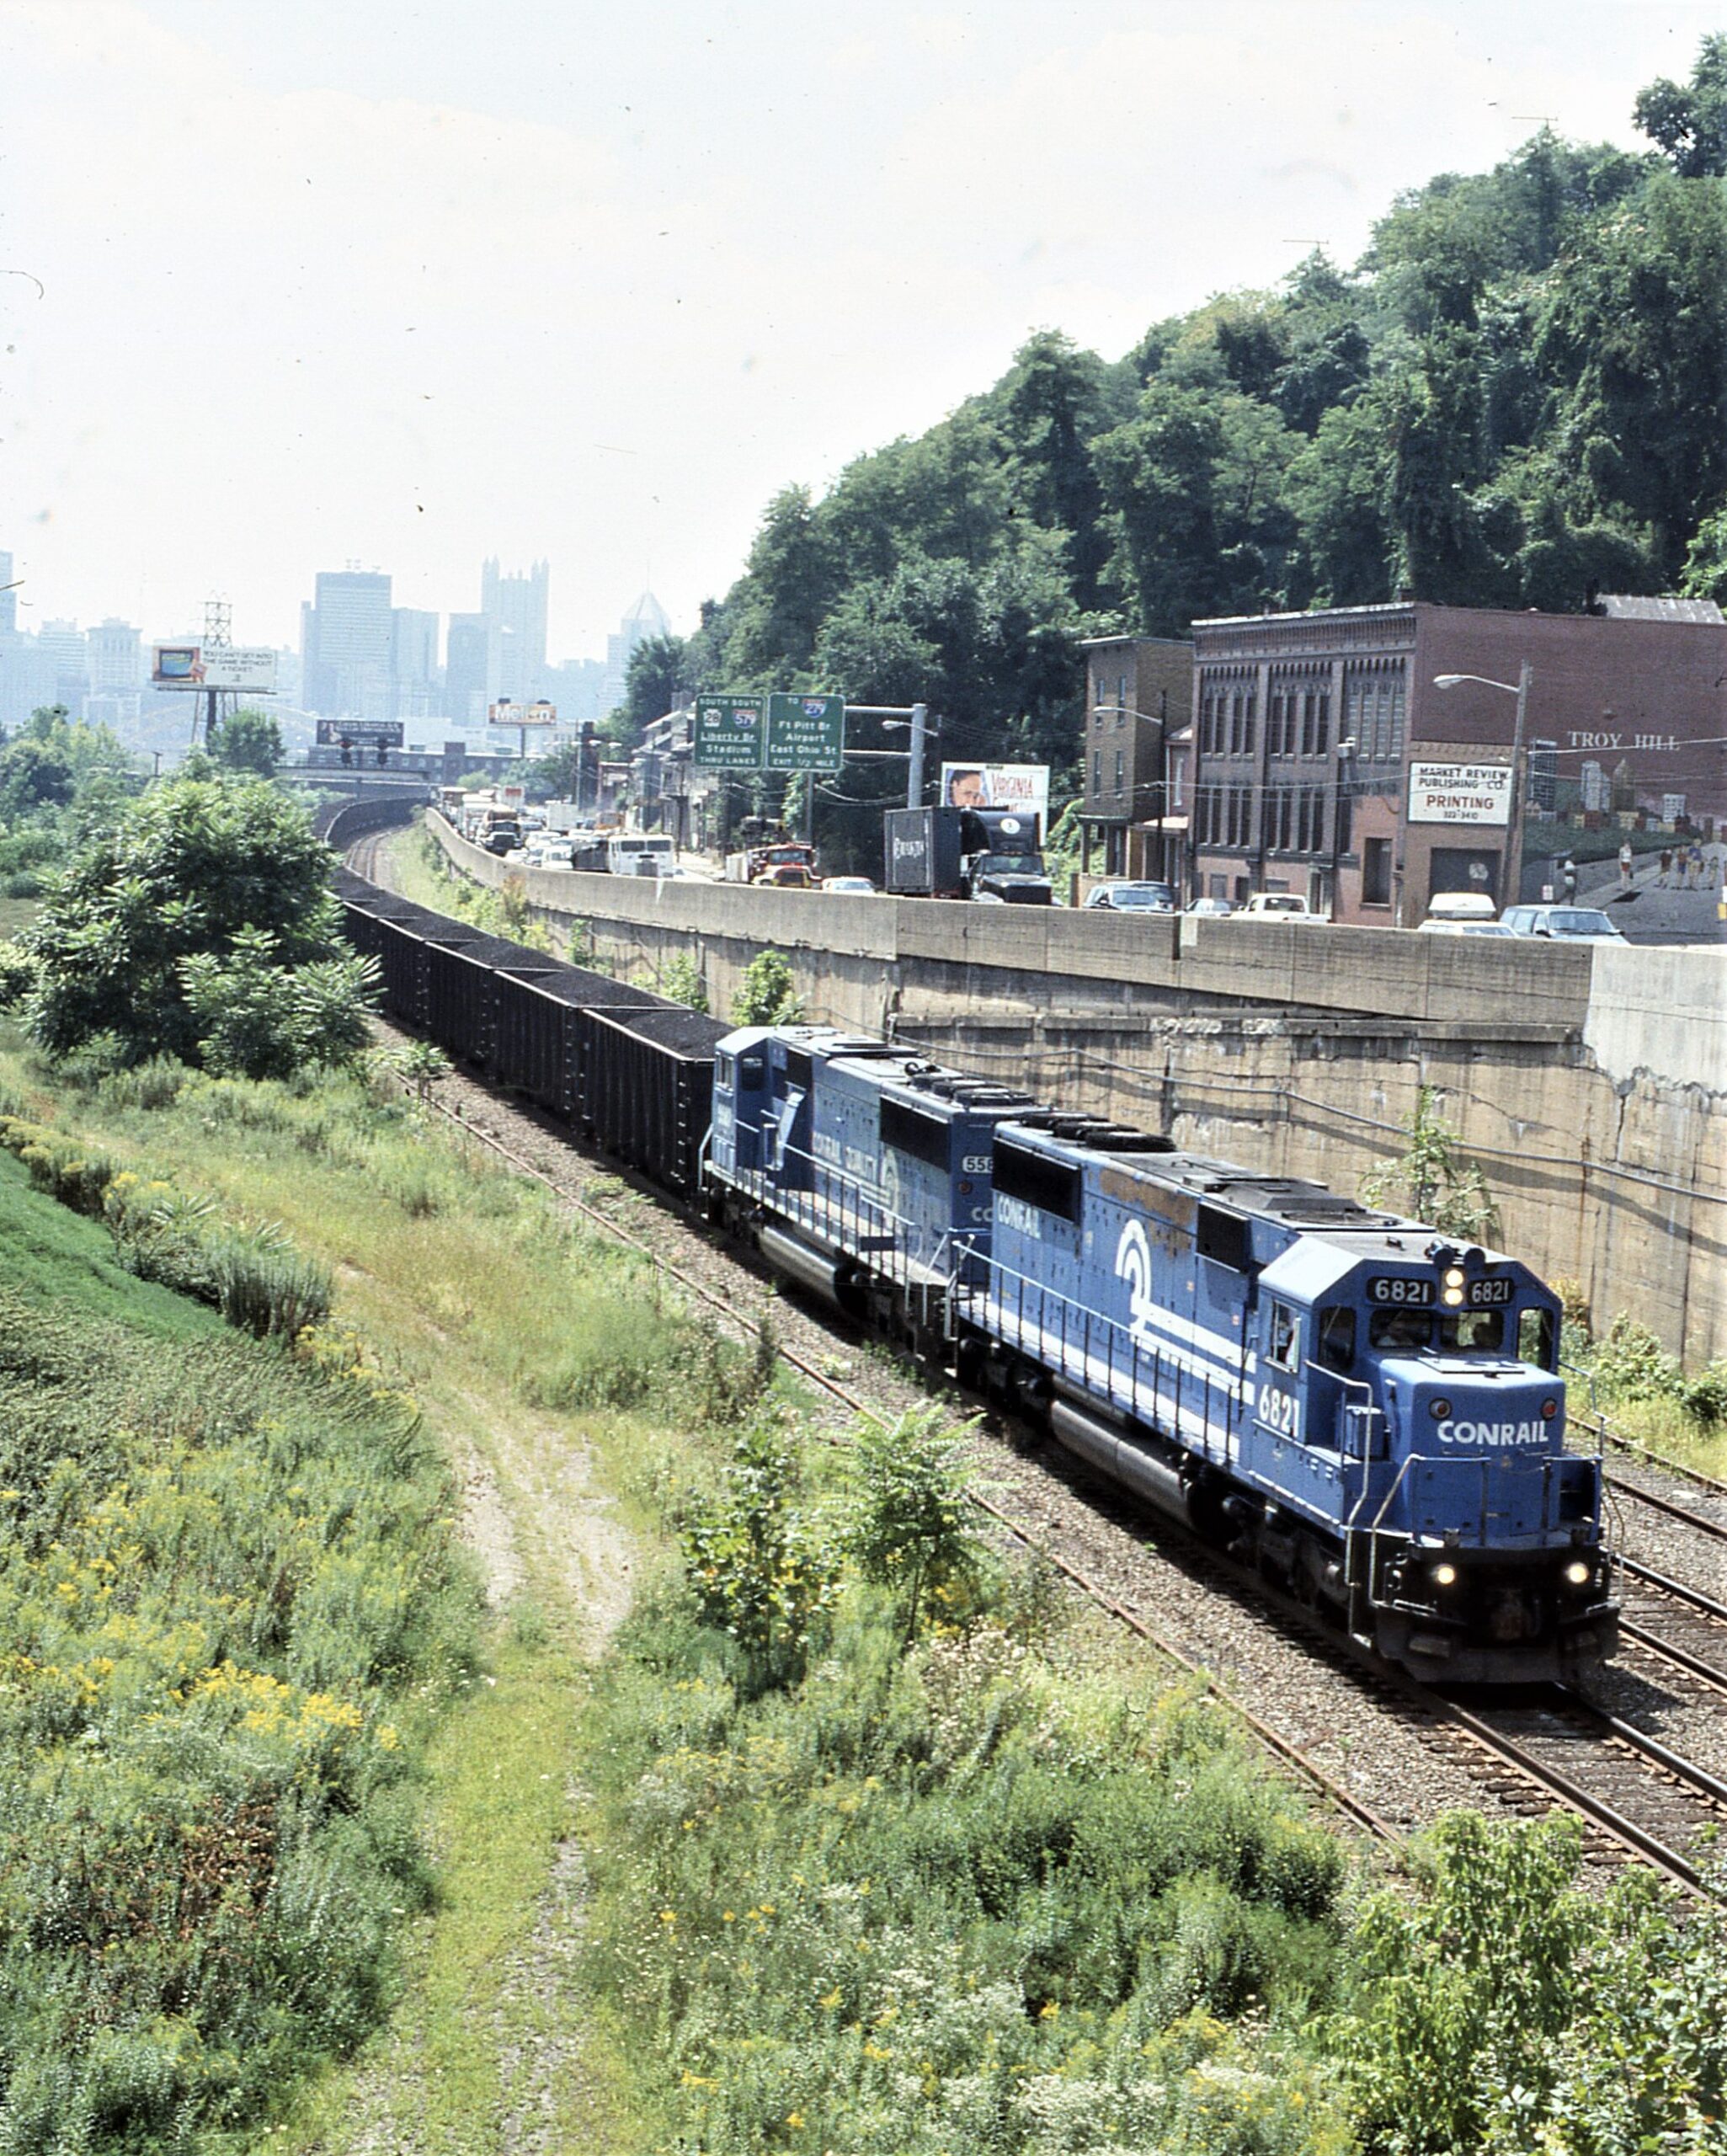 Conrail | Pittsburgh, Pennsylvania | EMD Diesel-electric SD60 #6821 + SD60M #5587 | Coal train | August 26, 1996 | Dick Flock photograph